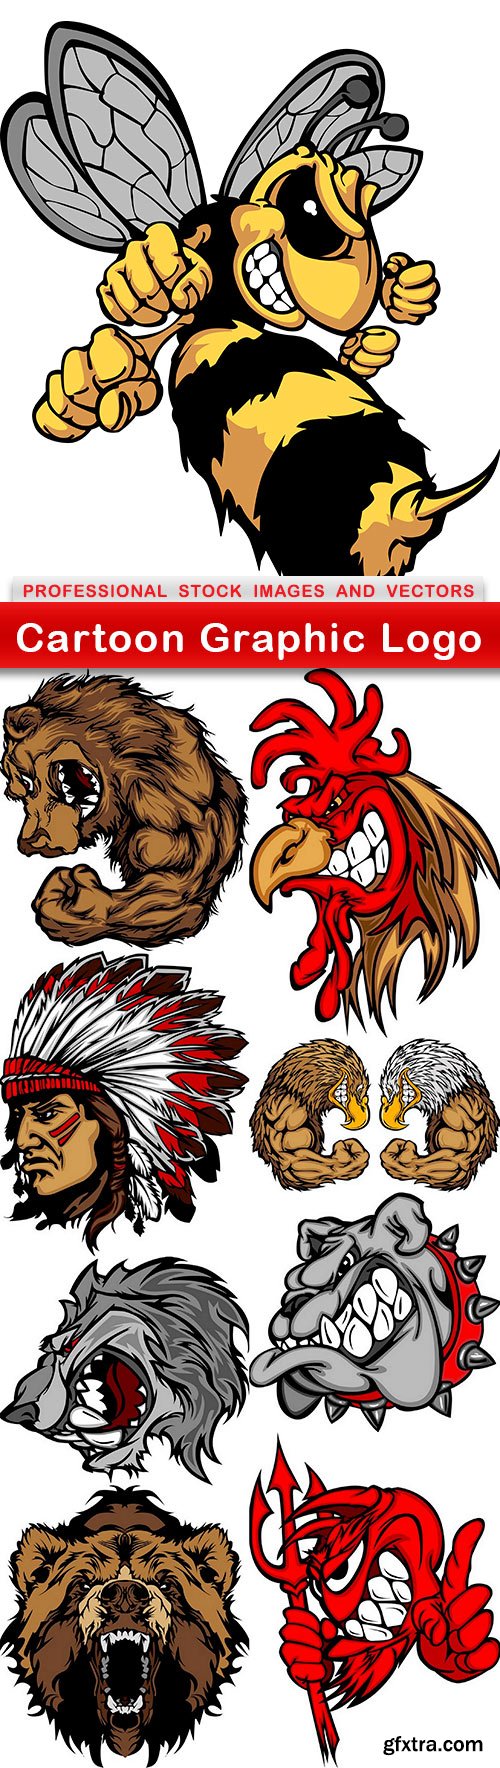 Cartoon Graphic Logo - 9 EPS